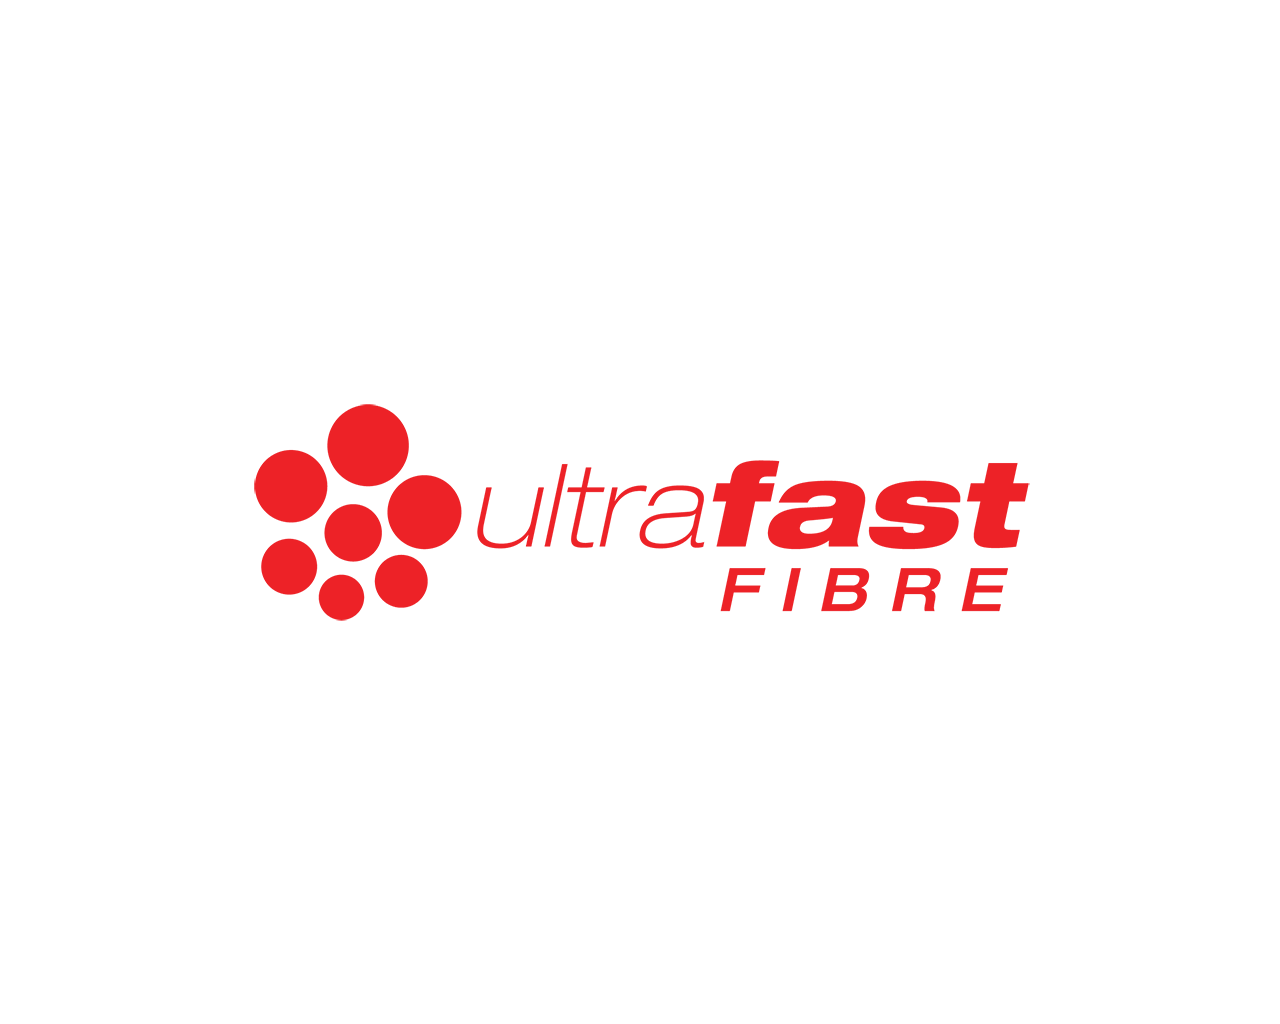 Ultrafast Fibre logo